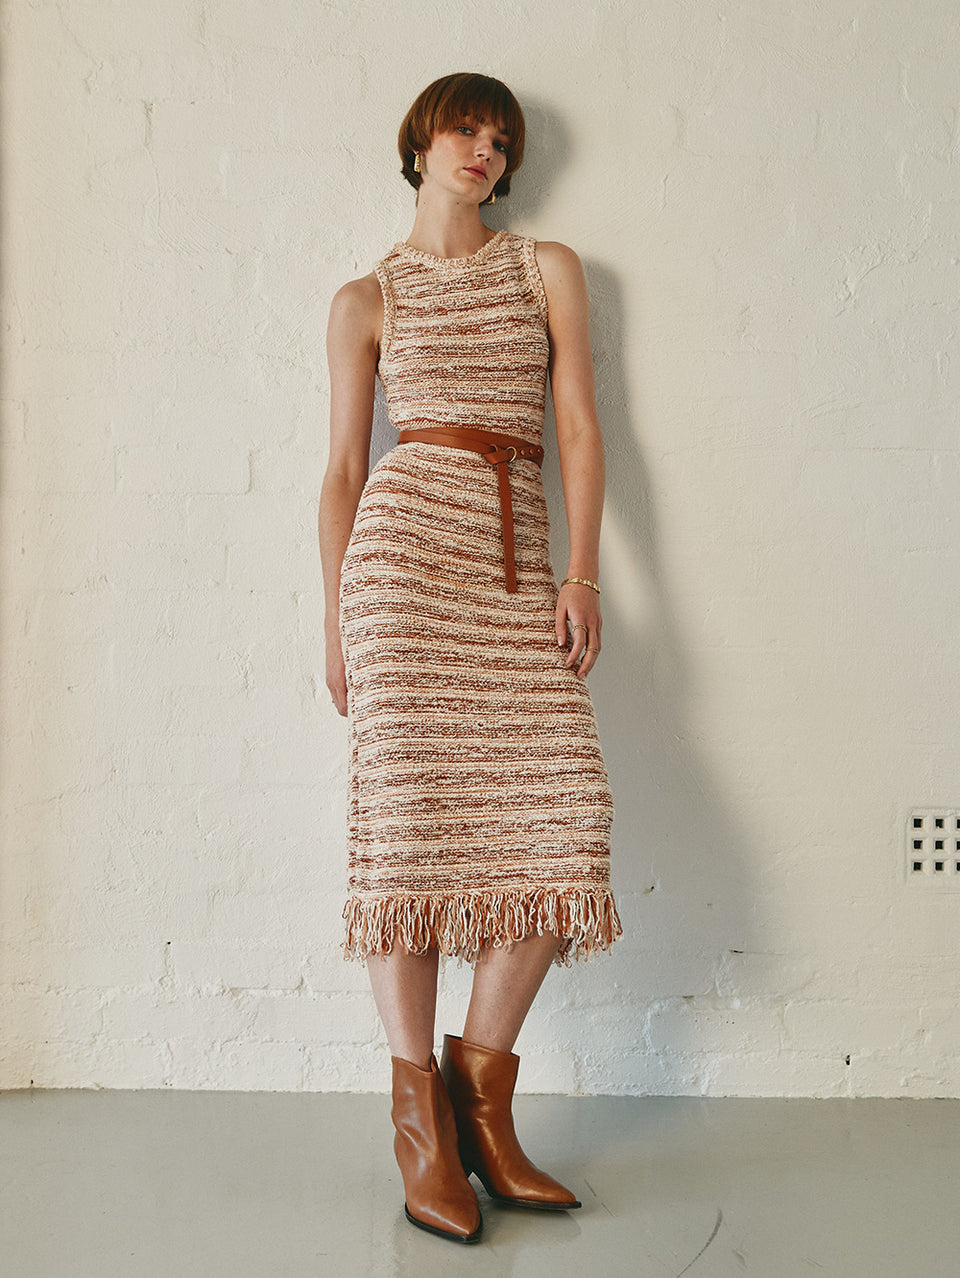 Luciana Knit Dress KIVARI | Model wears knit stripe dress campaign